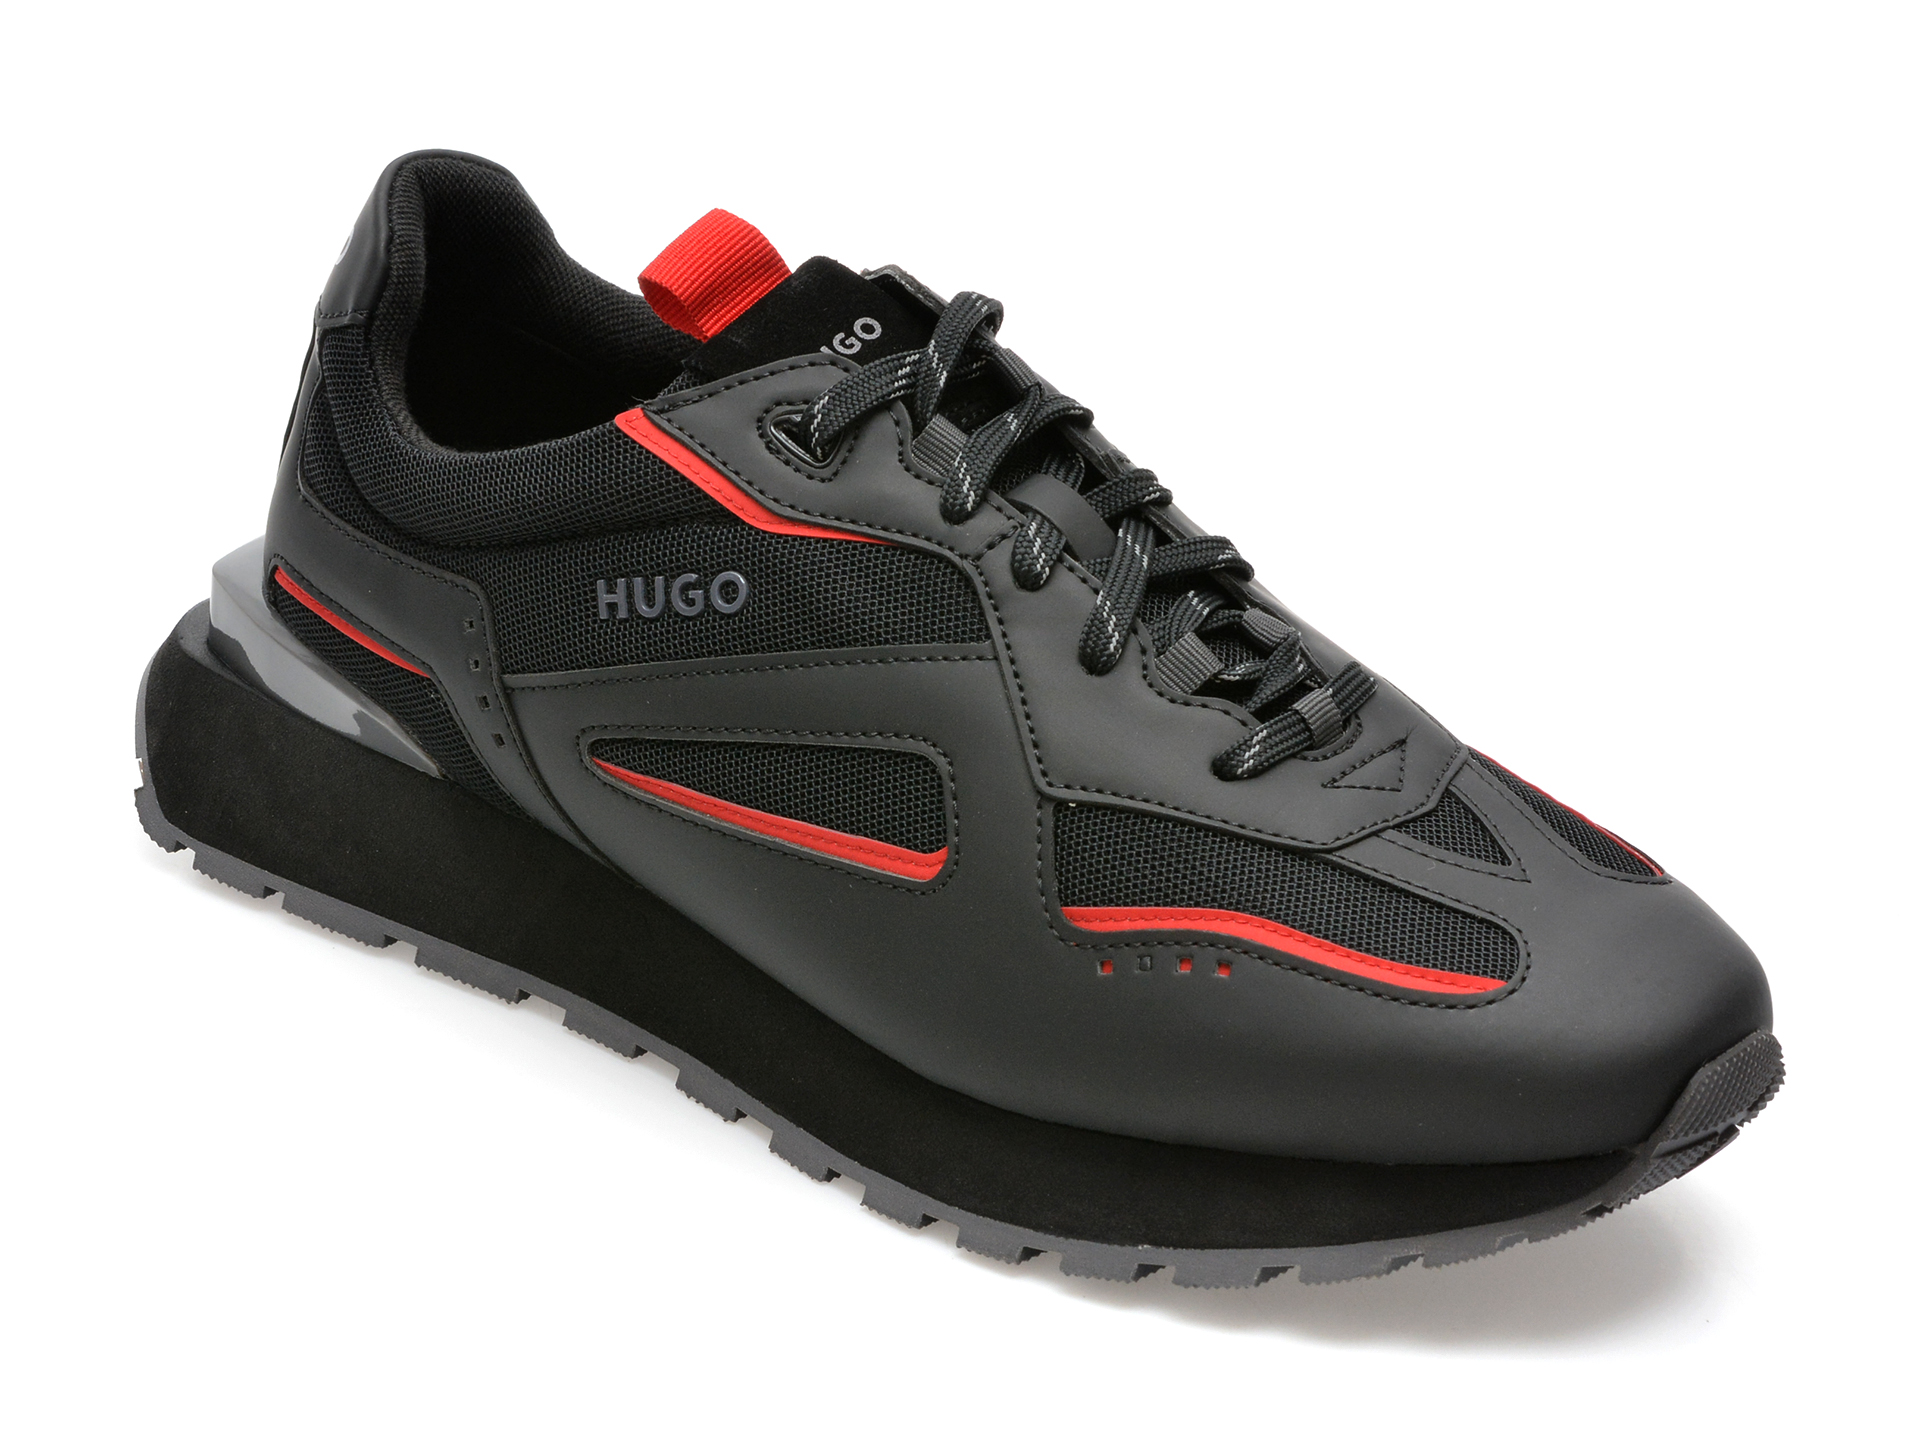 Pantofi sport HUGO BOSS negri, 463, din material textil si piele ecologica